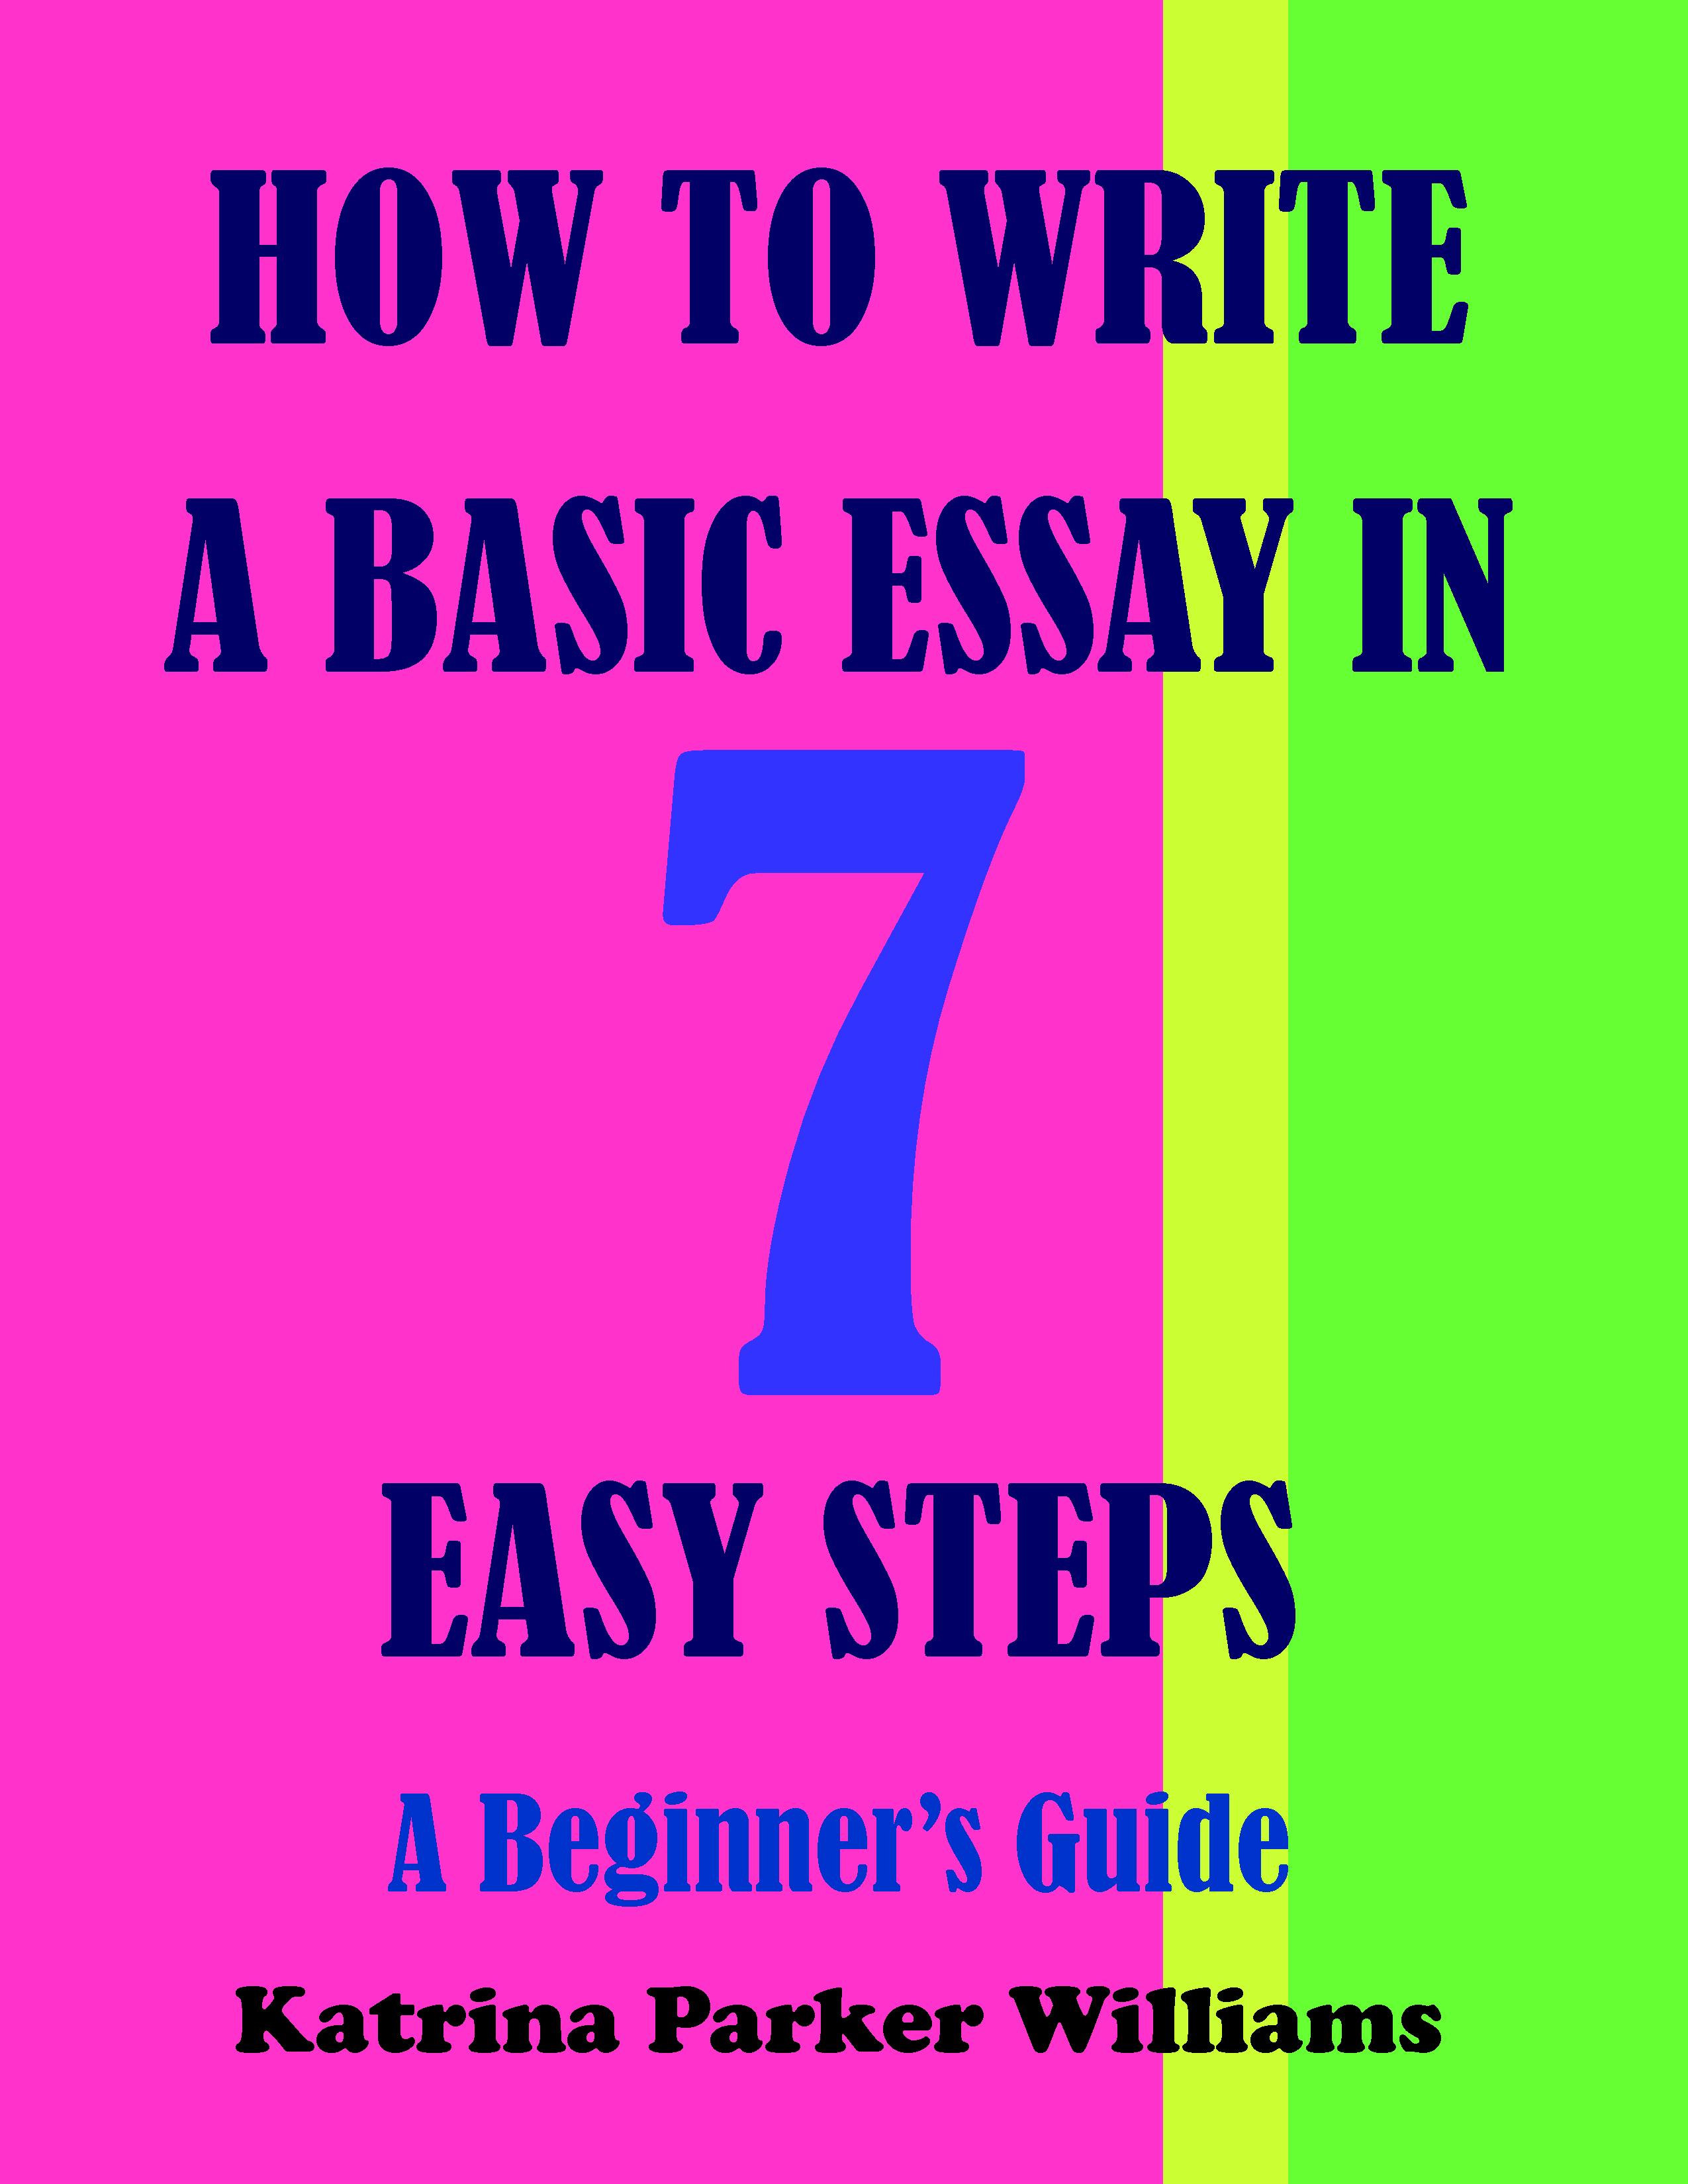 Essay easy